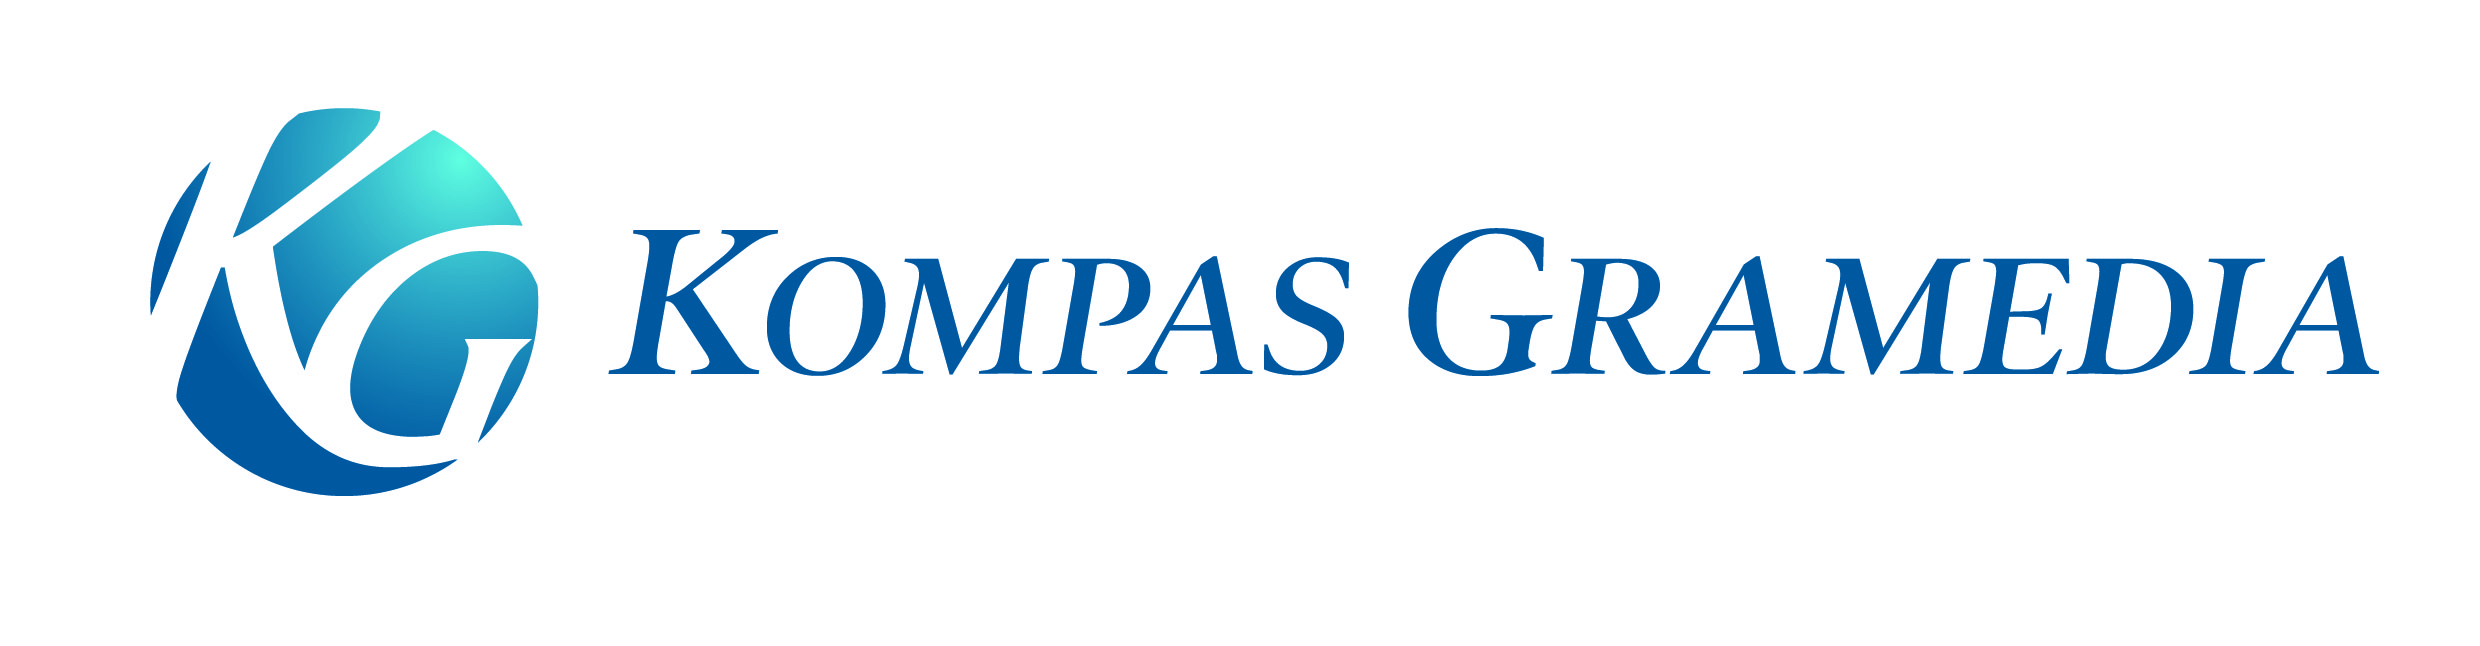 Kompas-Gramedia